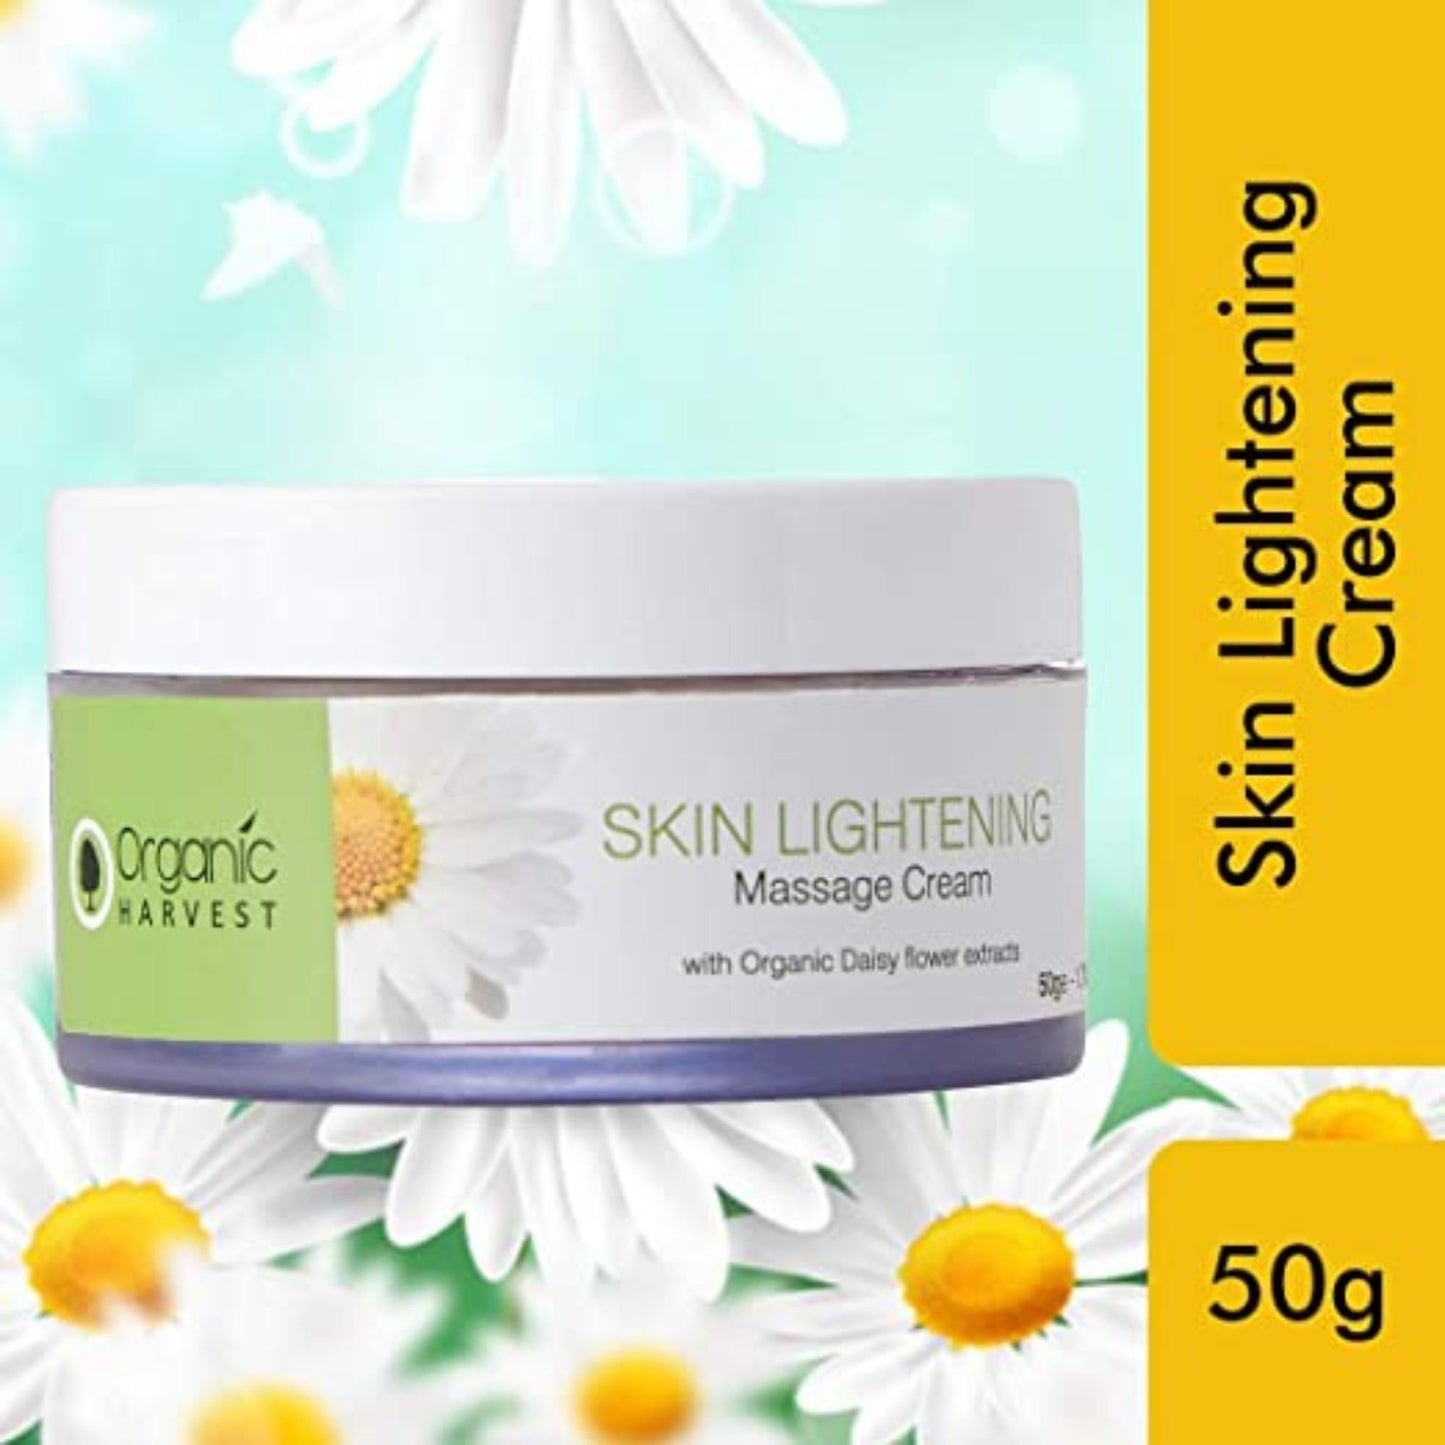 Organic Harvest  Massage Cream